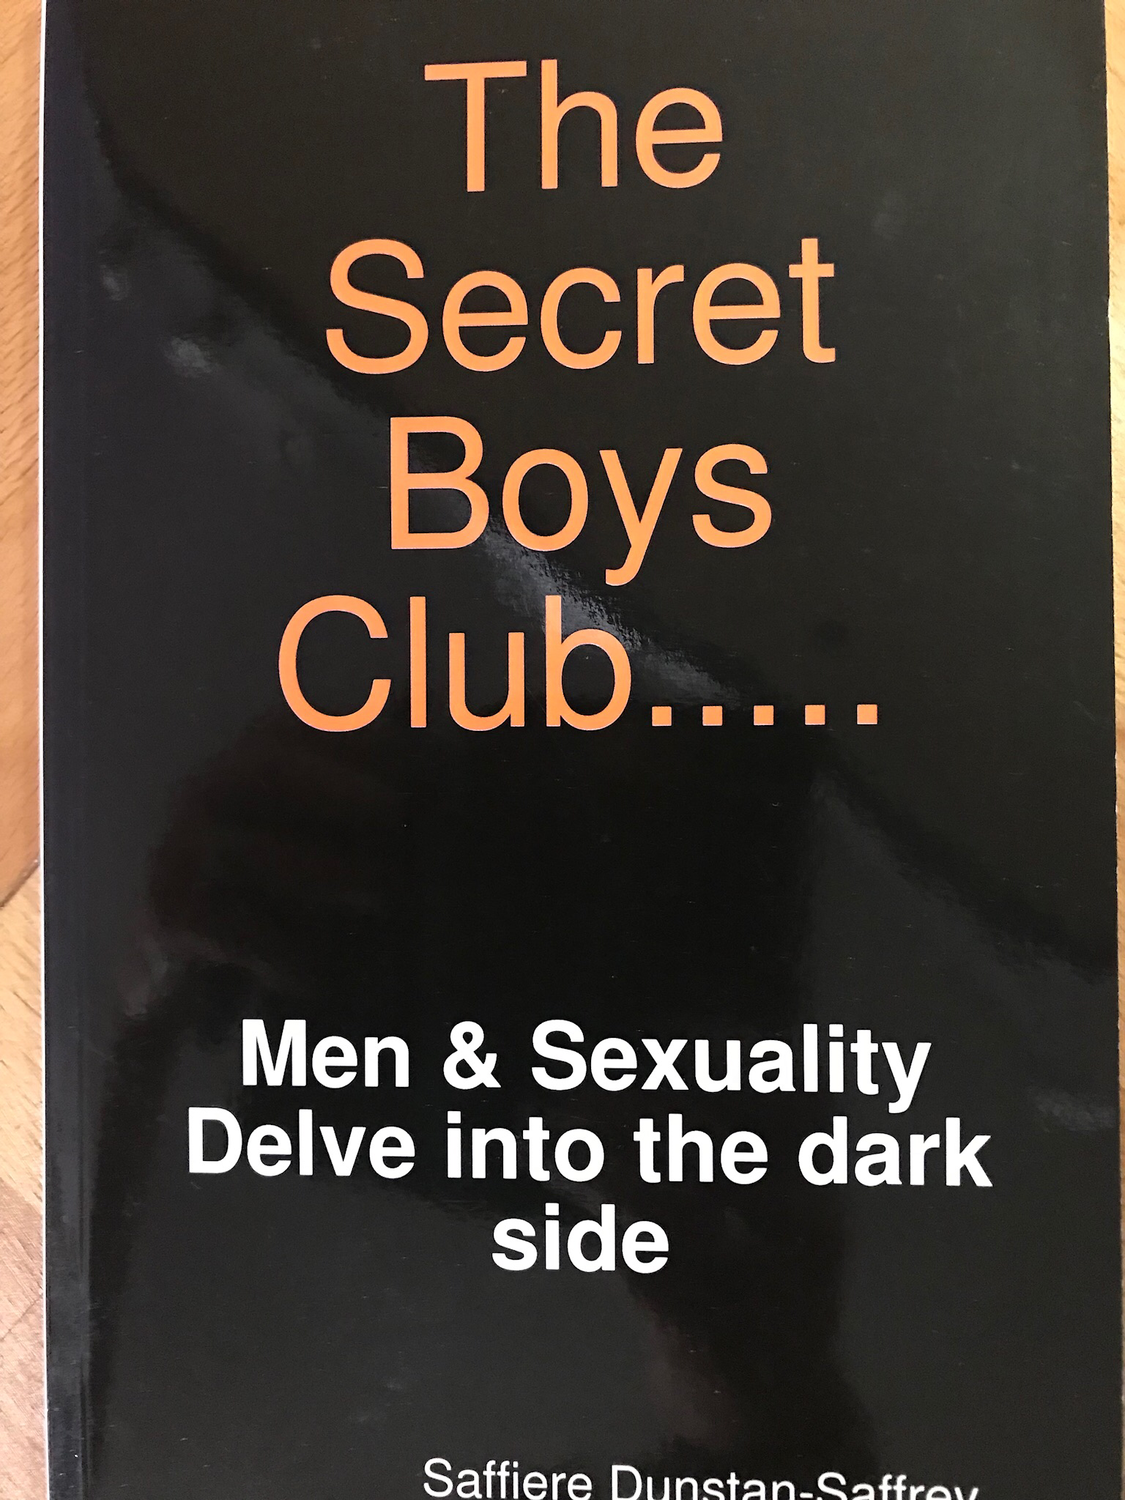 The Secret Boys Club (Book)